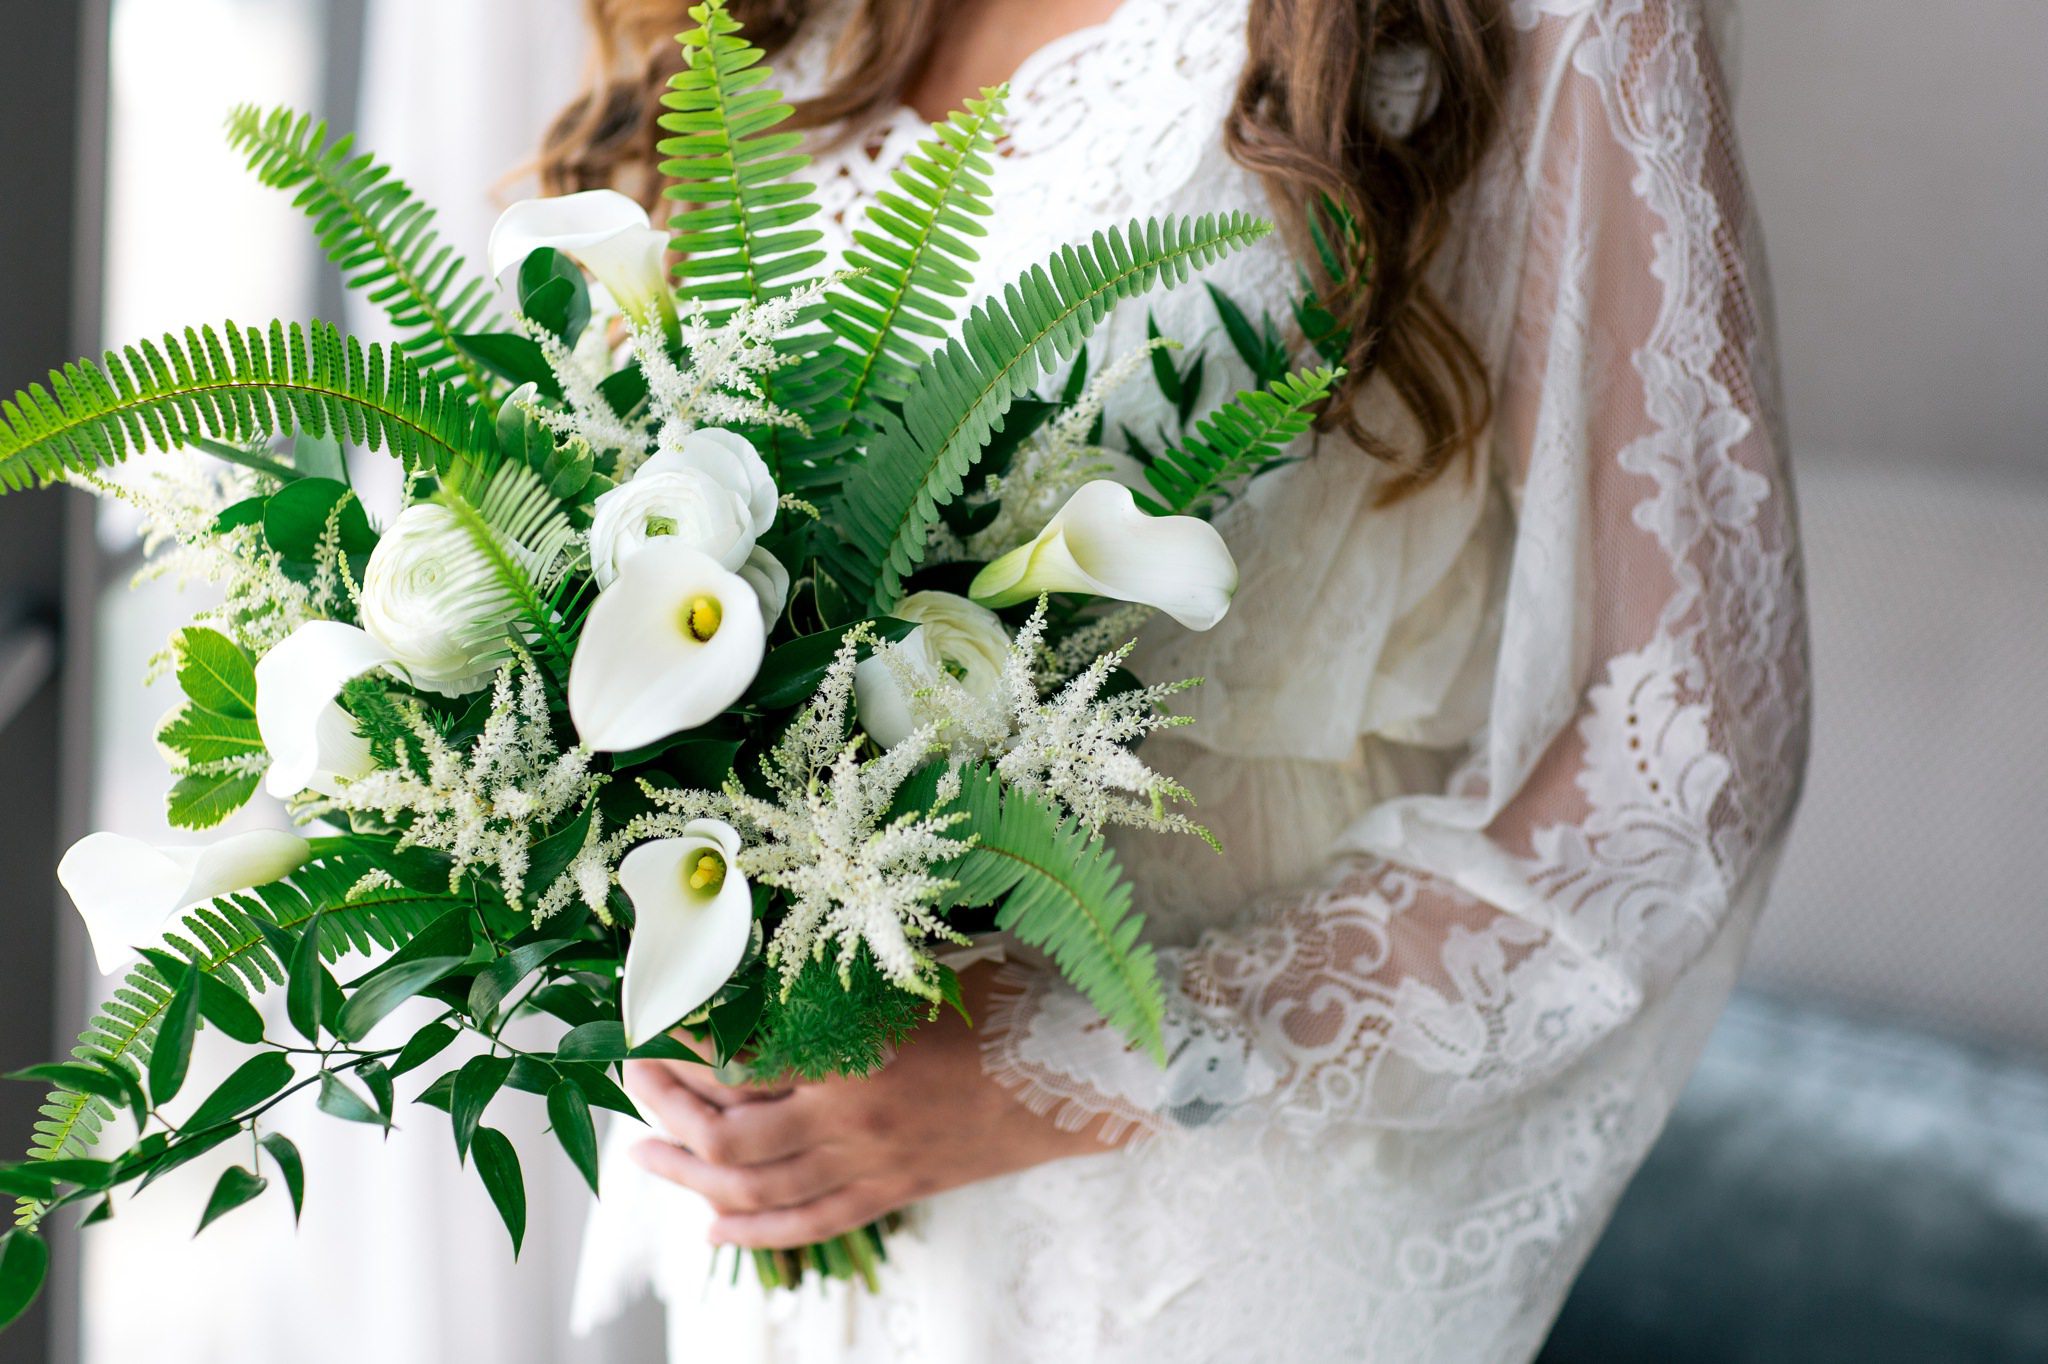 Bridal bouquet with ferns